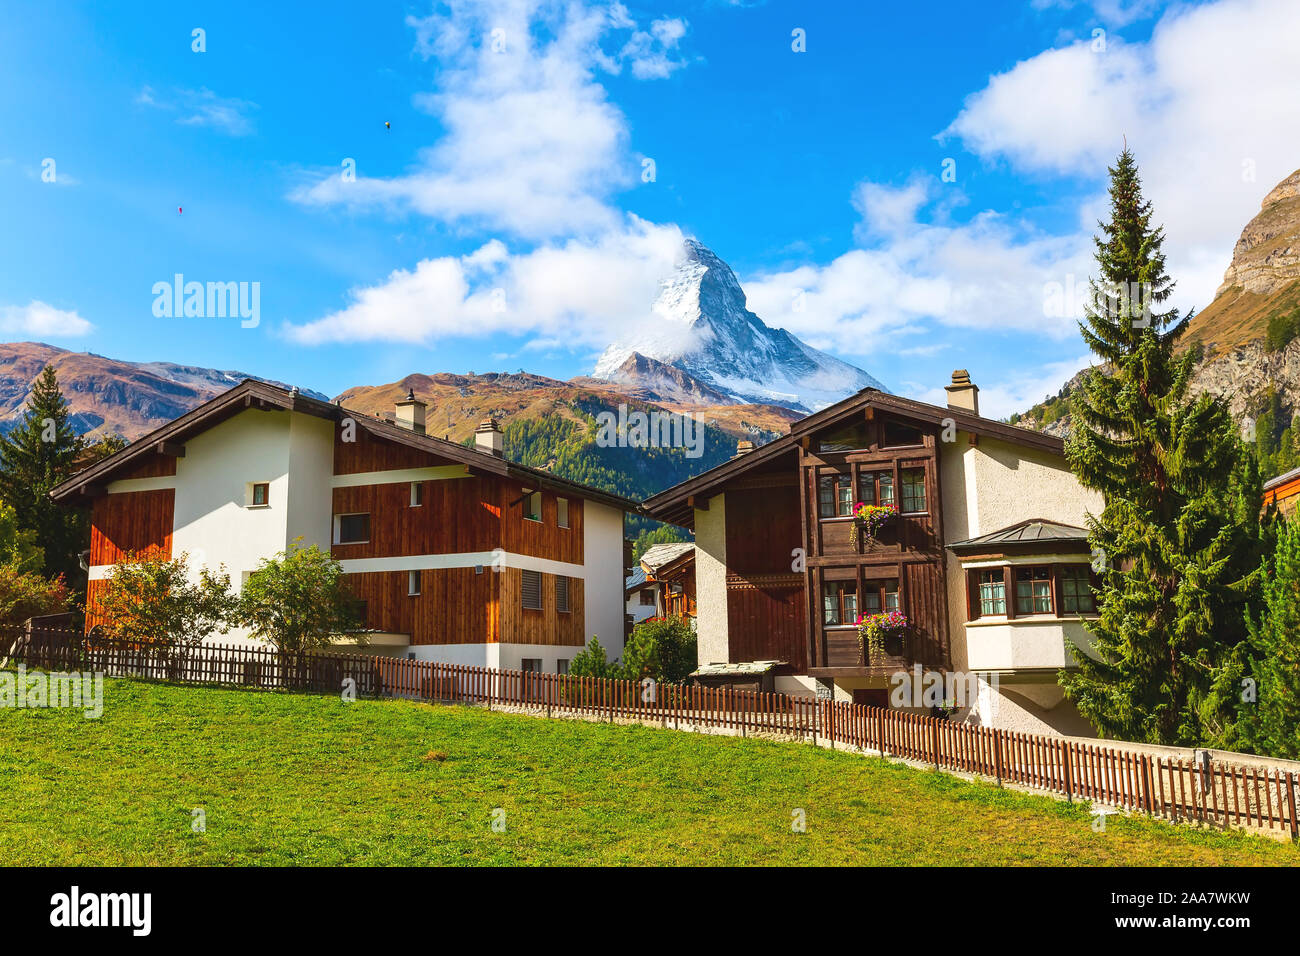 Cervino Snow mount, parapendii e Zermatt case alpine panorama, Svizzera, Alpi Svizzere Foto Stock